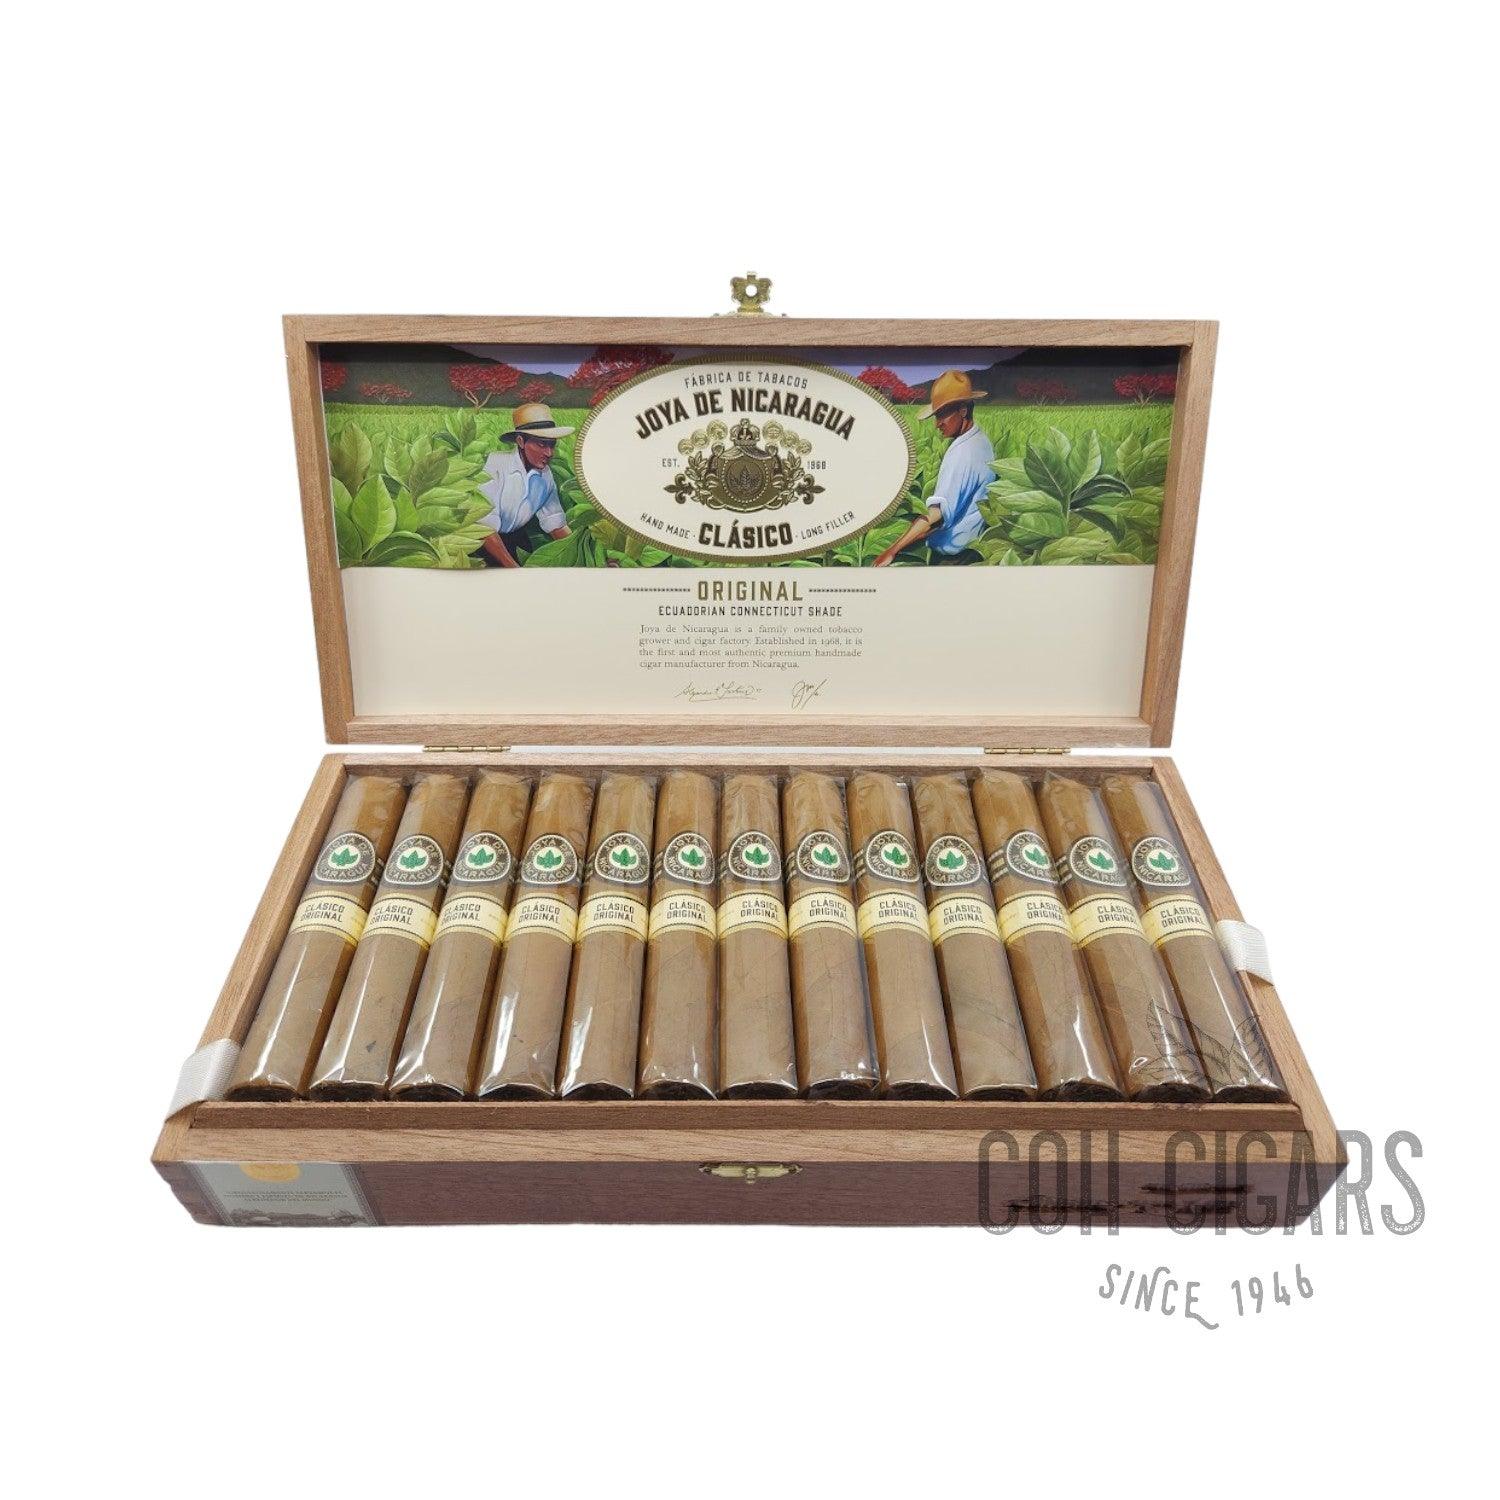 Joya De Nicaragua Cigar | Clasico Original Consul | Box 25 - hk.cohcigars